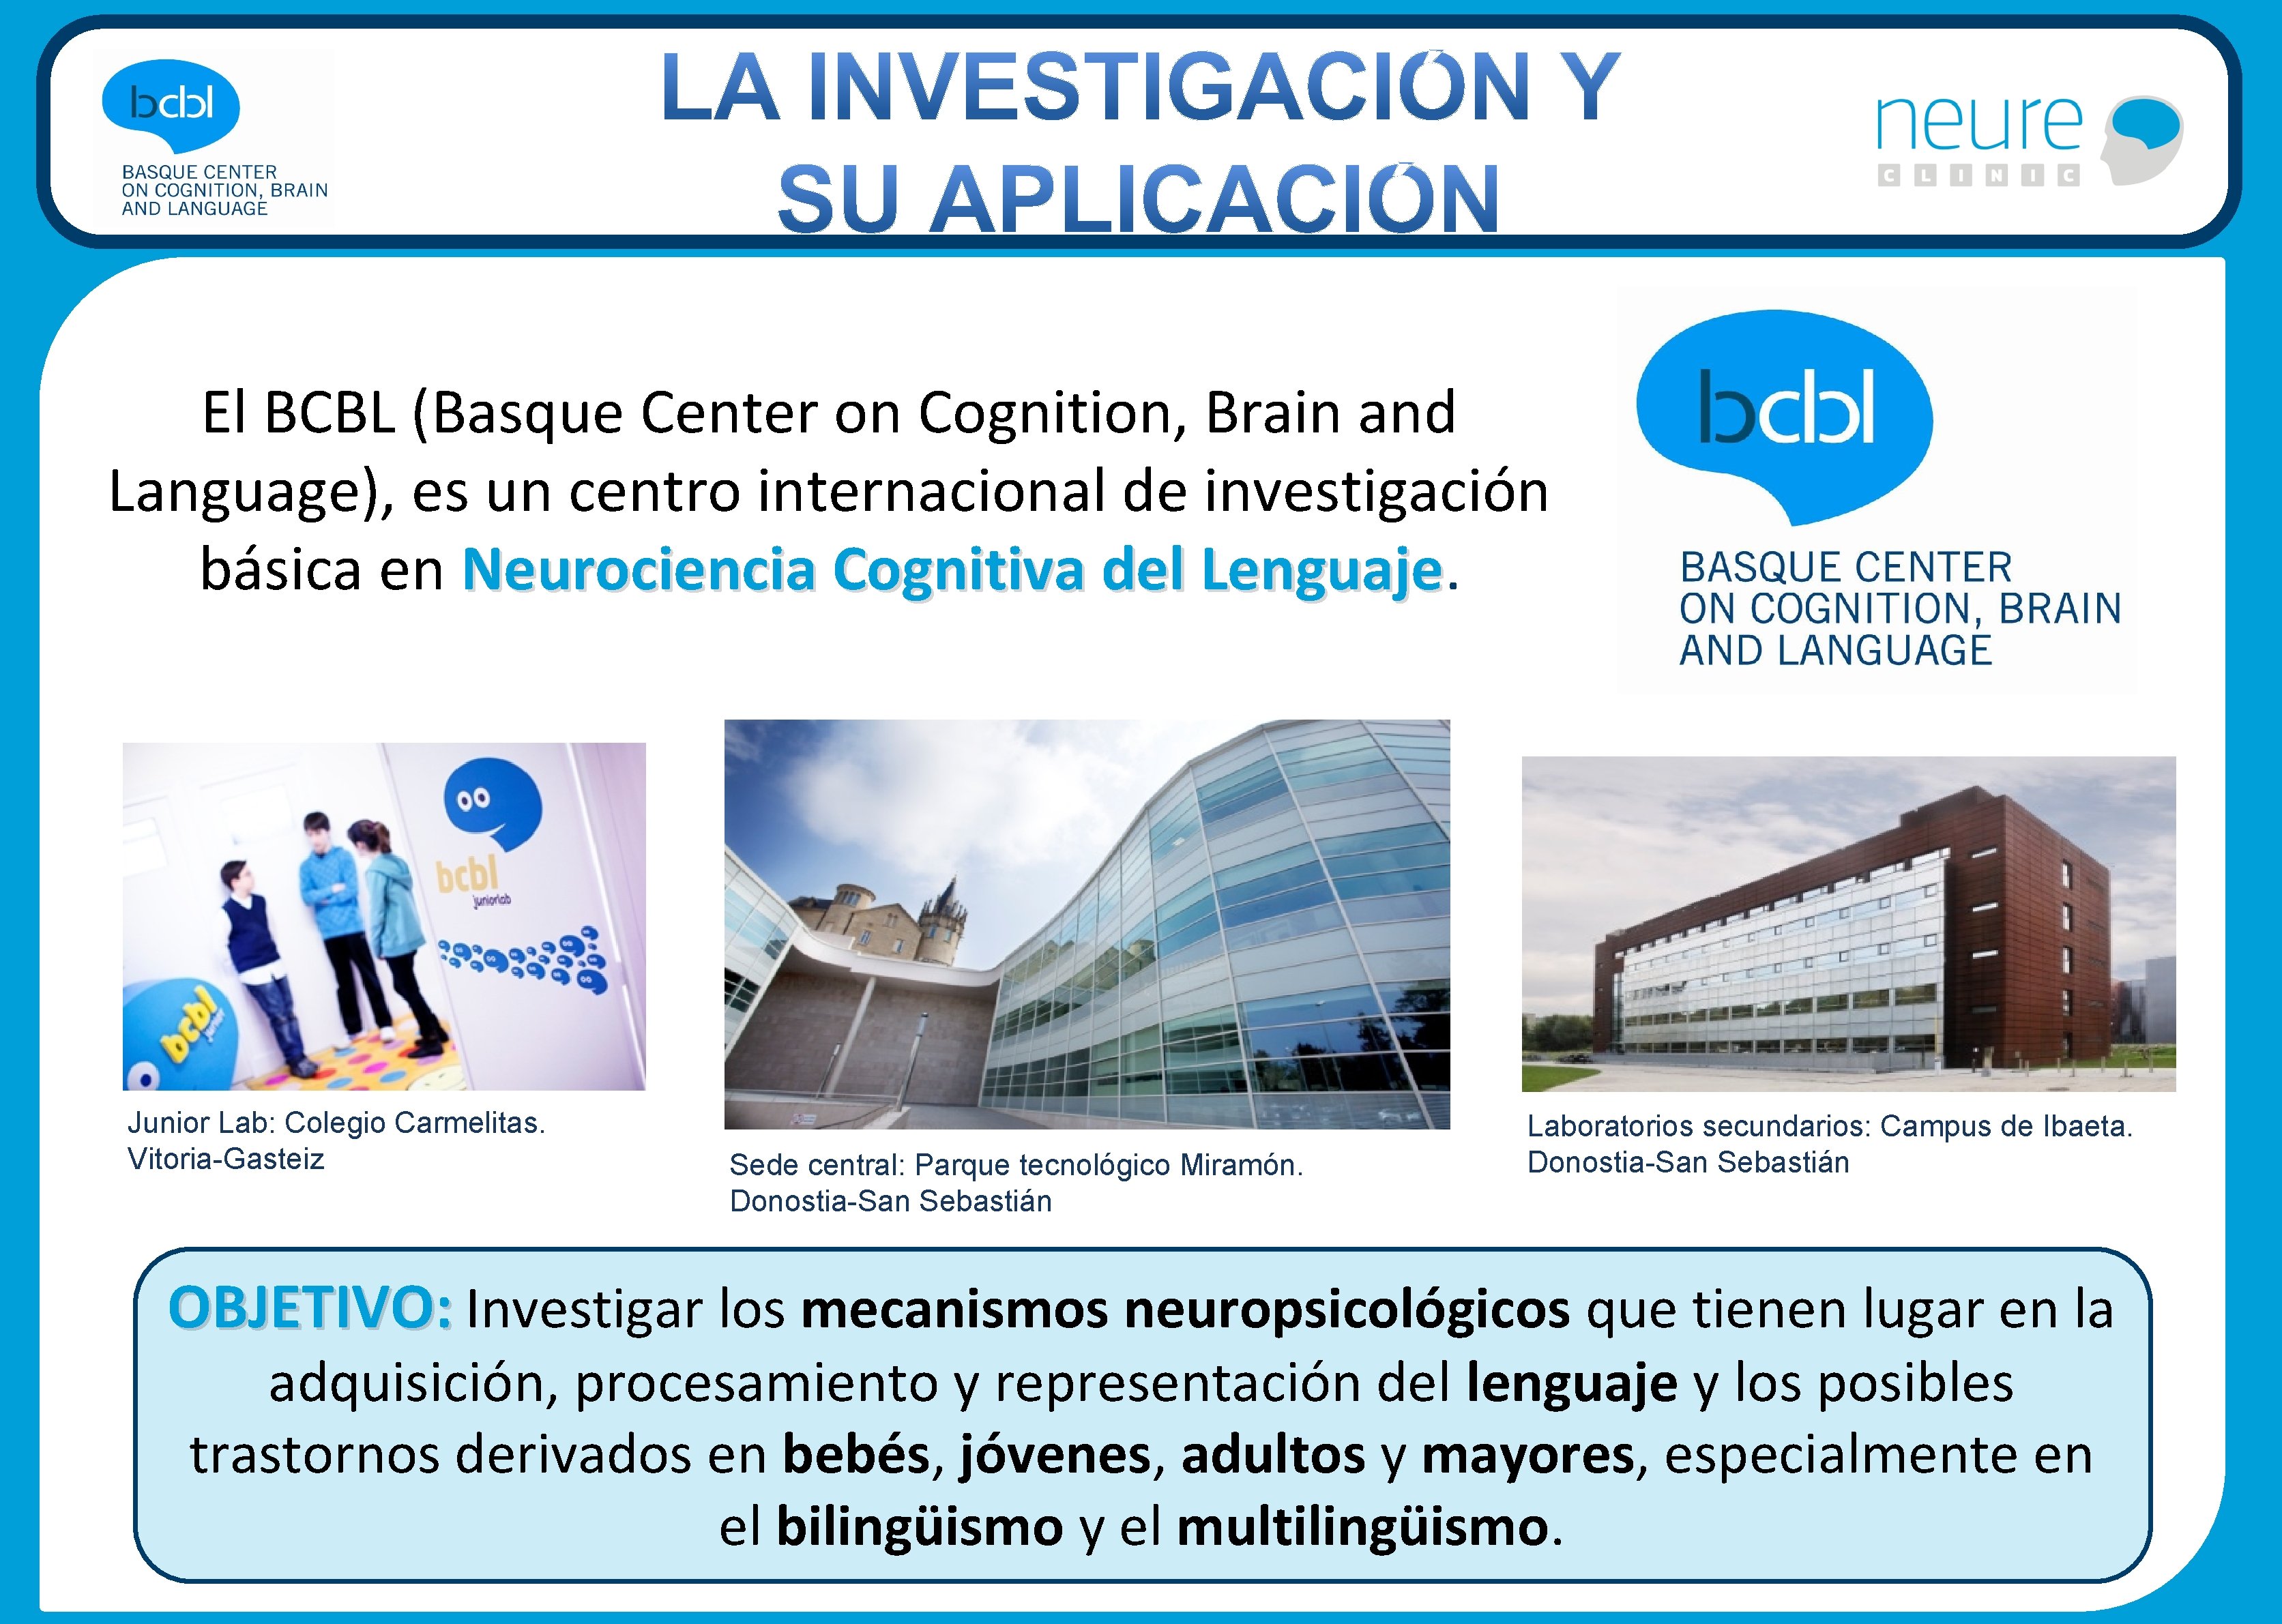 El BCBL (Basque Center on Cognition, Brain and Language), es un centro internacional de